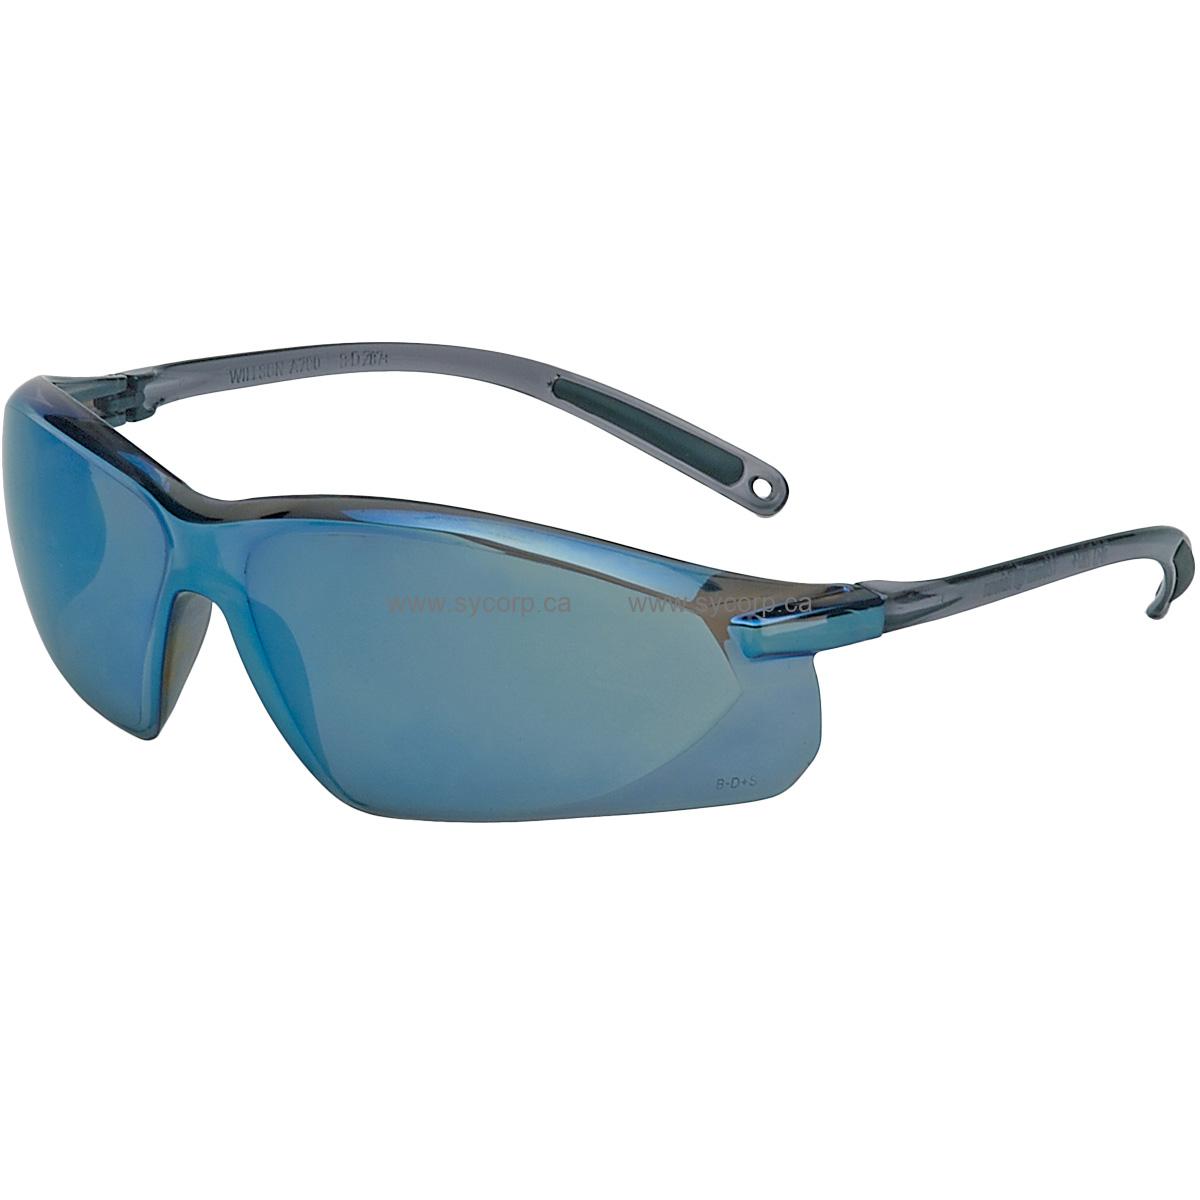 Honeywell UVEX A703 Protective Eyewear, Gray Frame, Blue Mirror Lens ...